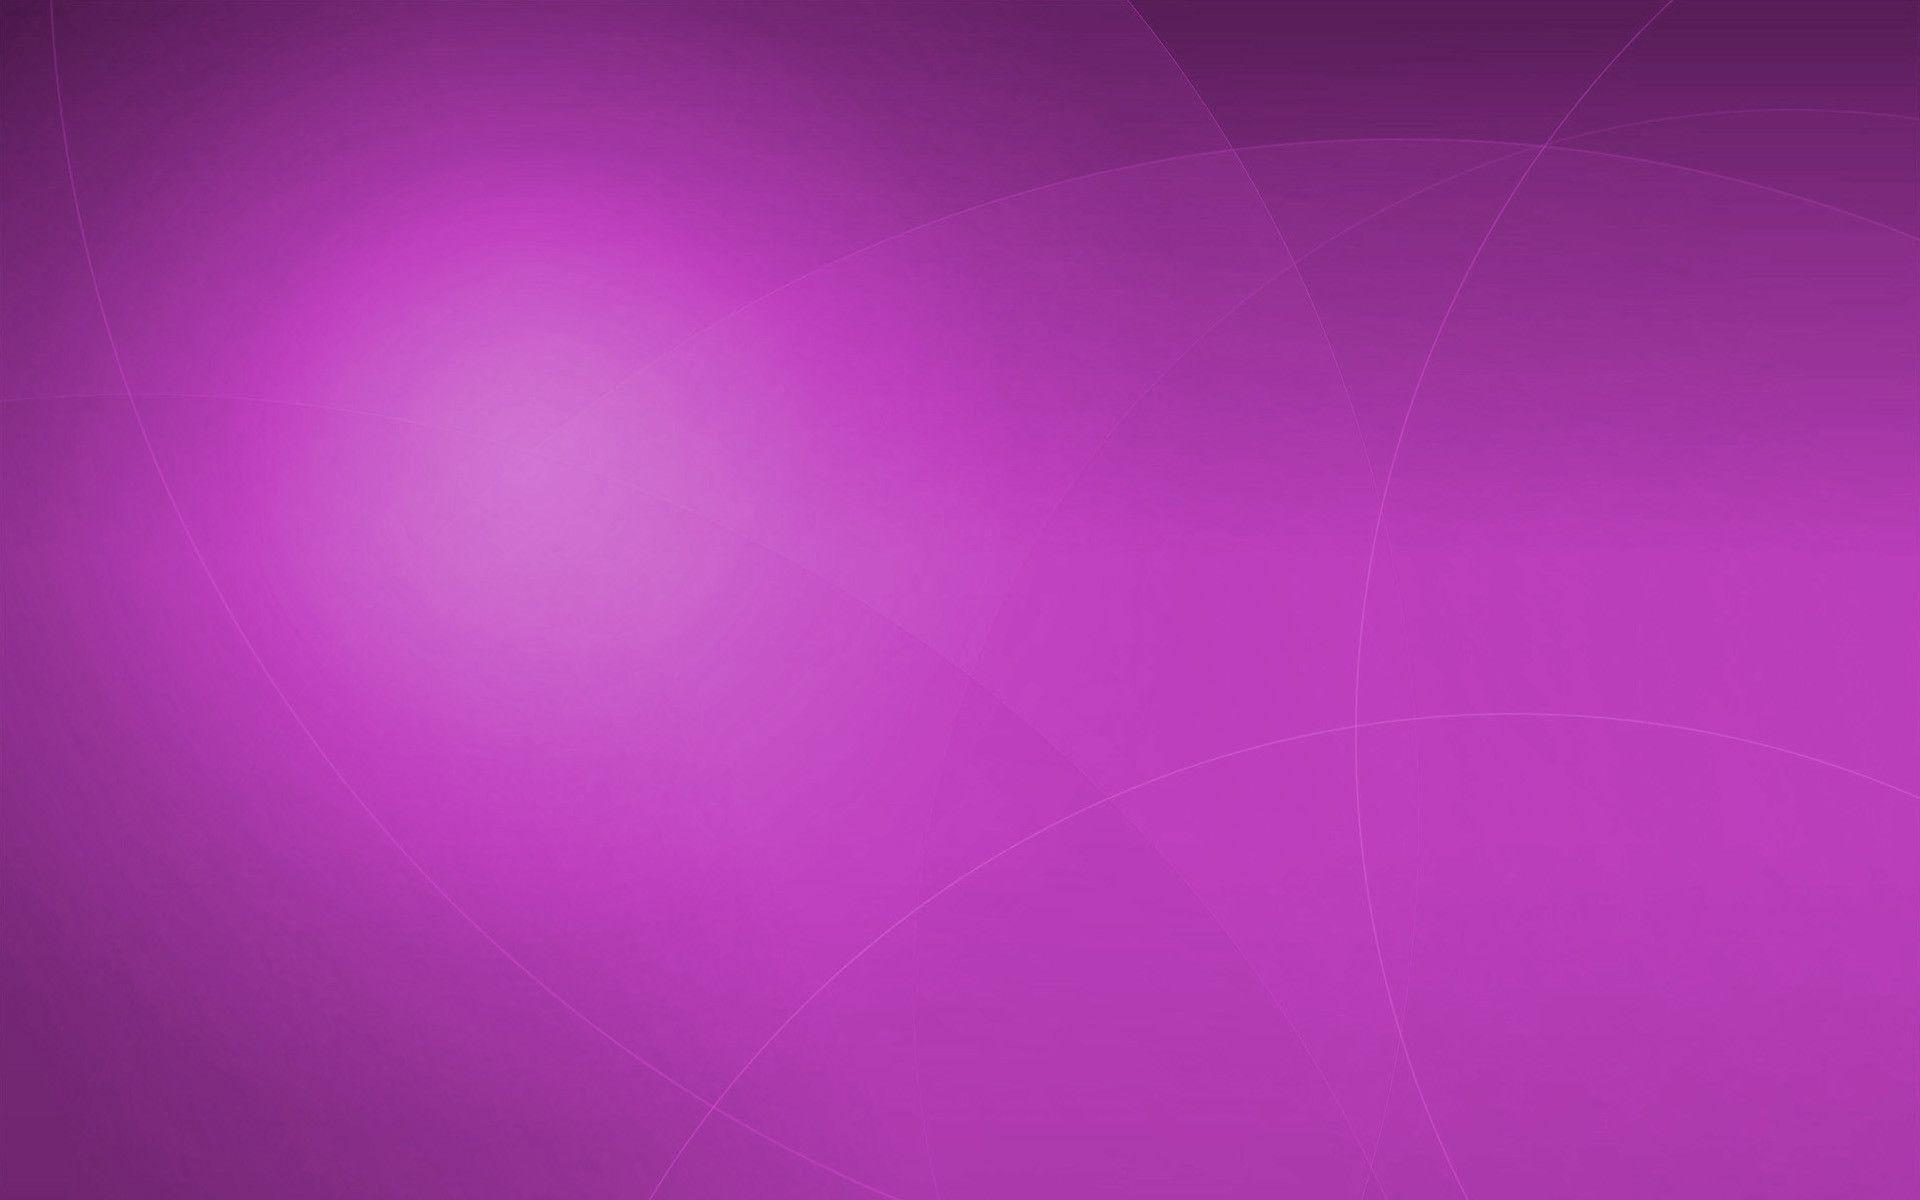 Plain Purple Background with Gradient Stock Image  Image of light plain  125009267